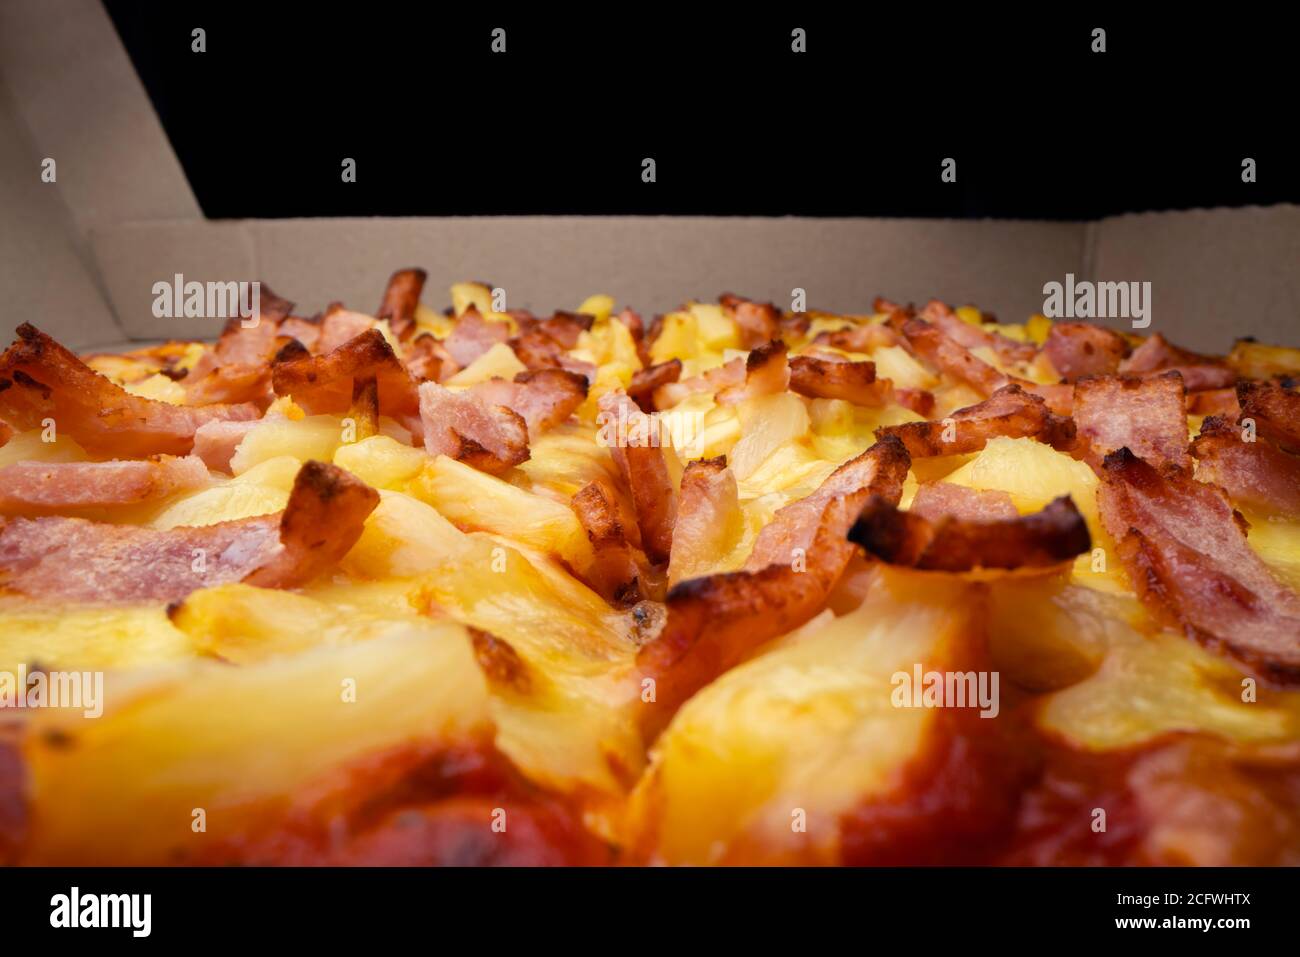 Macro view of takeaway pizza Stock Photo